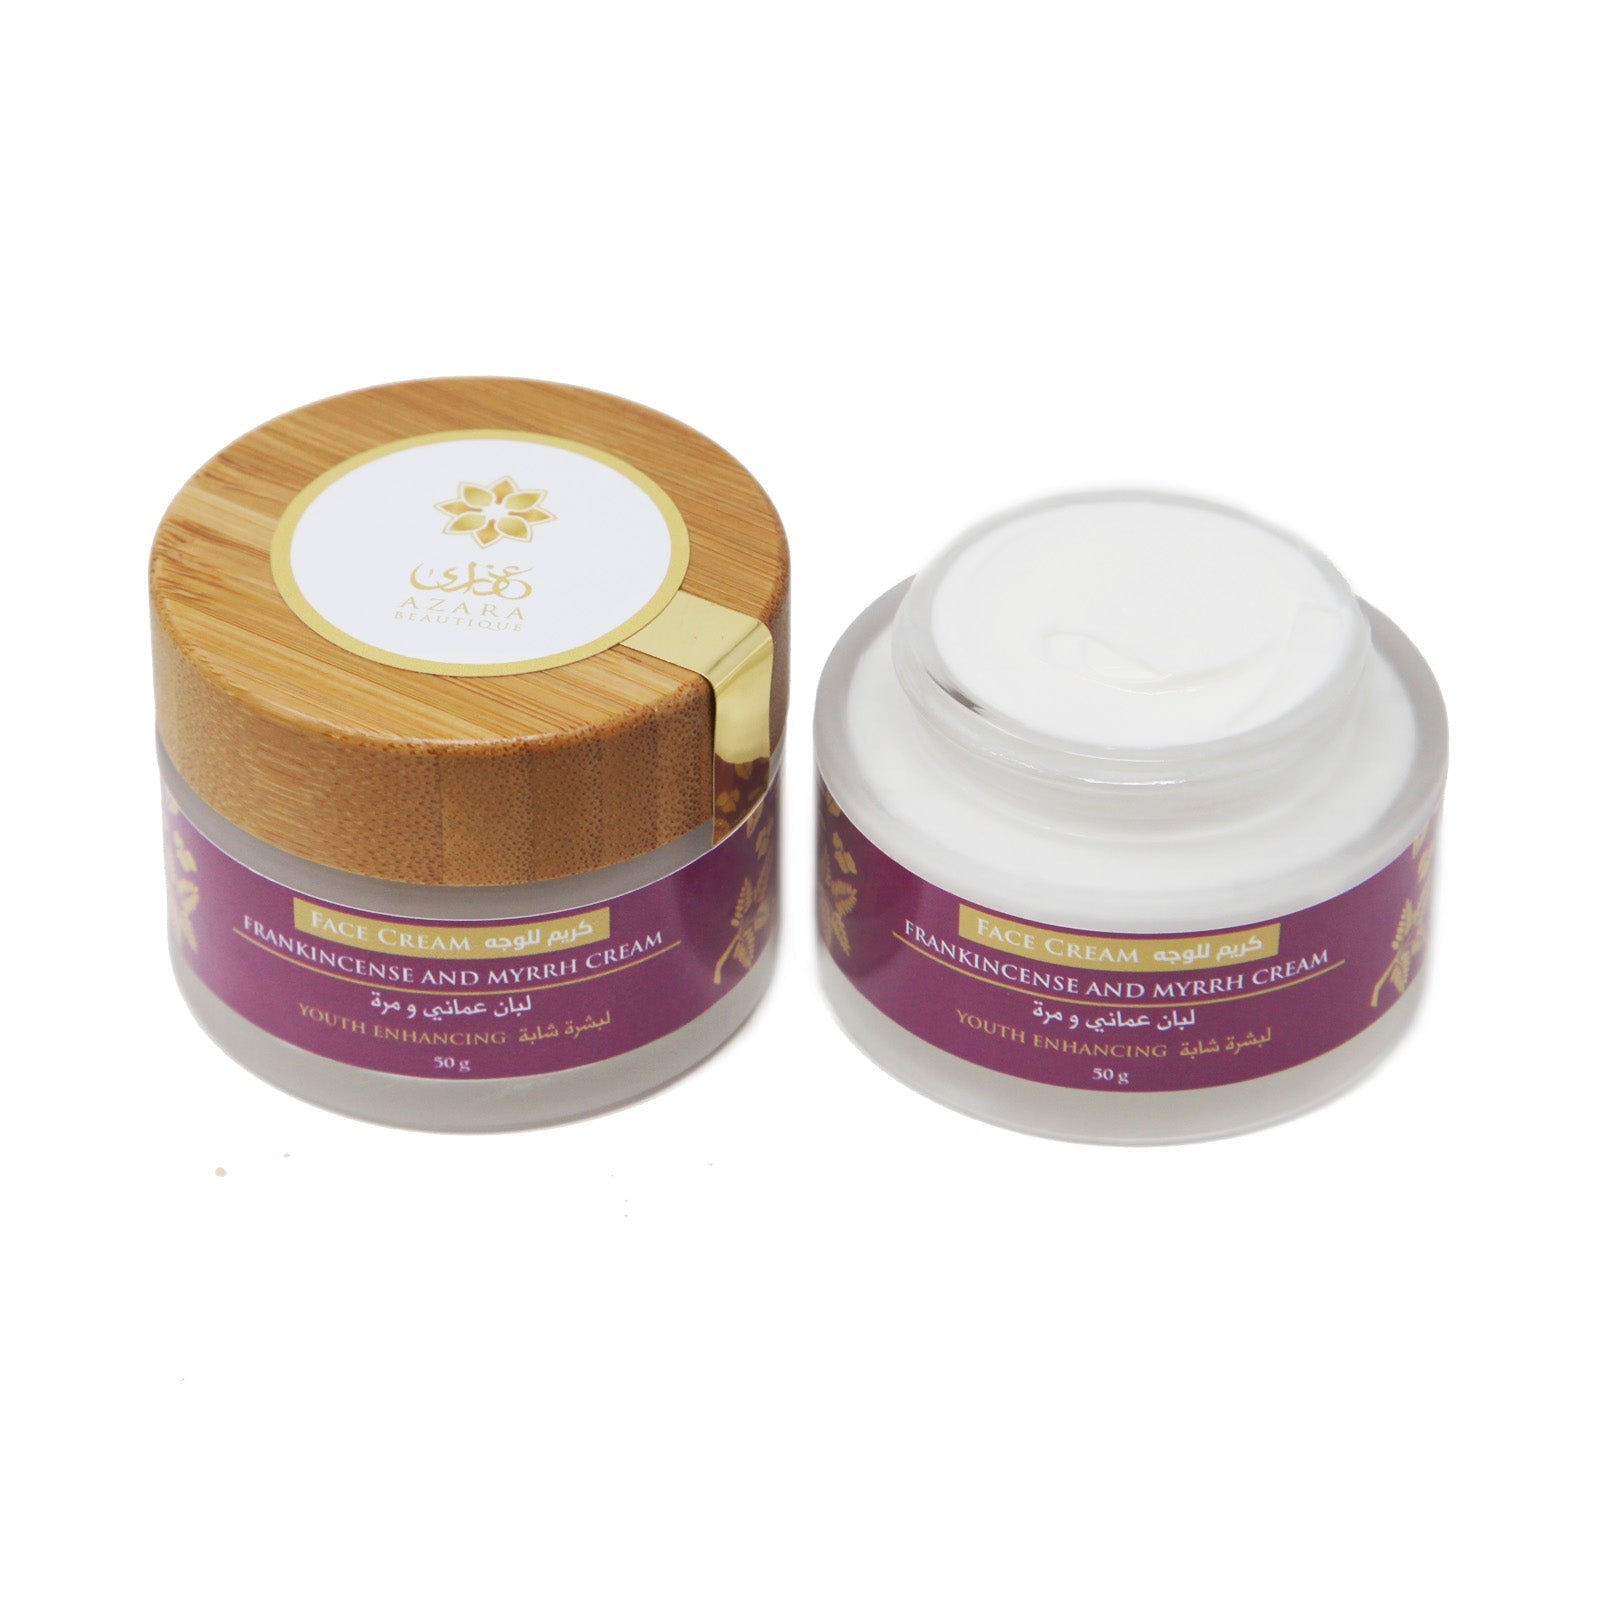 Frankincense and Myrrh Face Cream - 50g